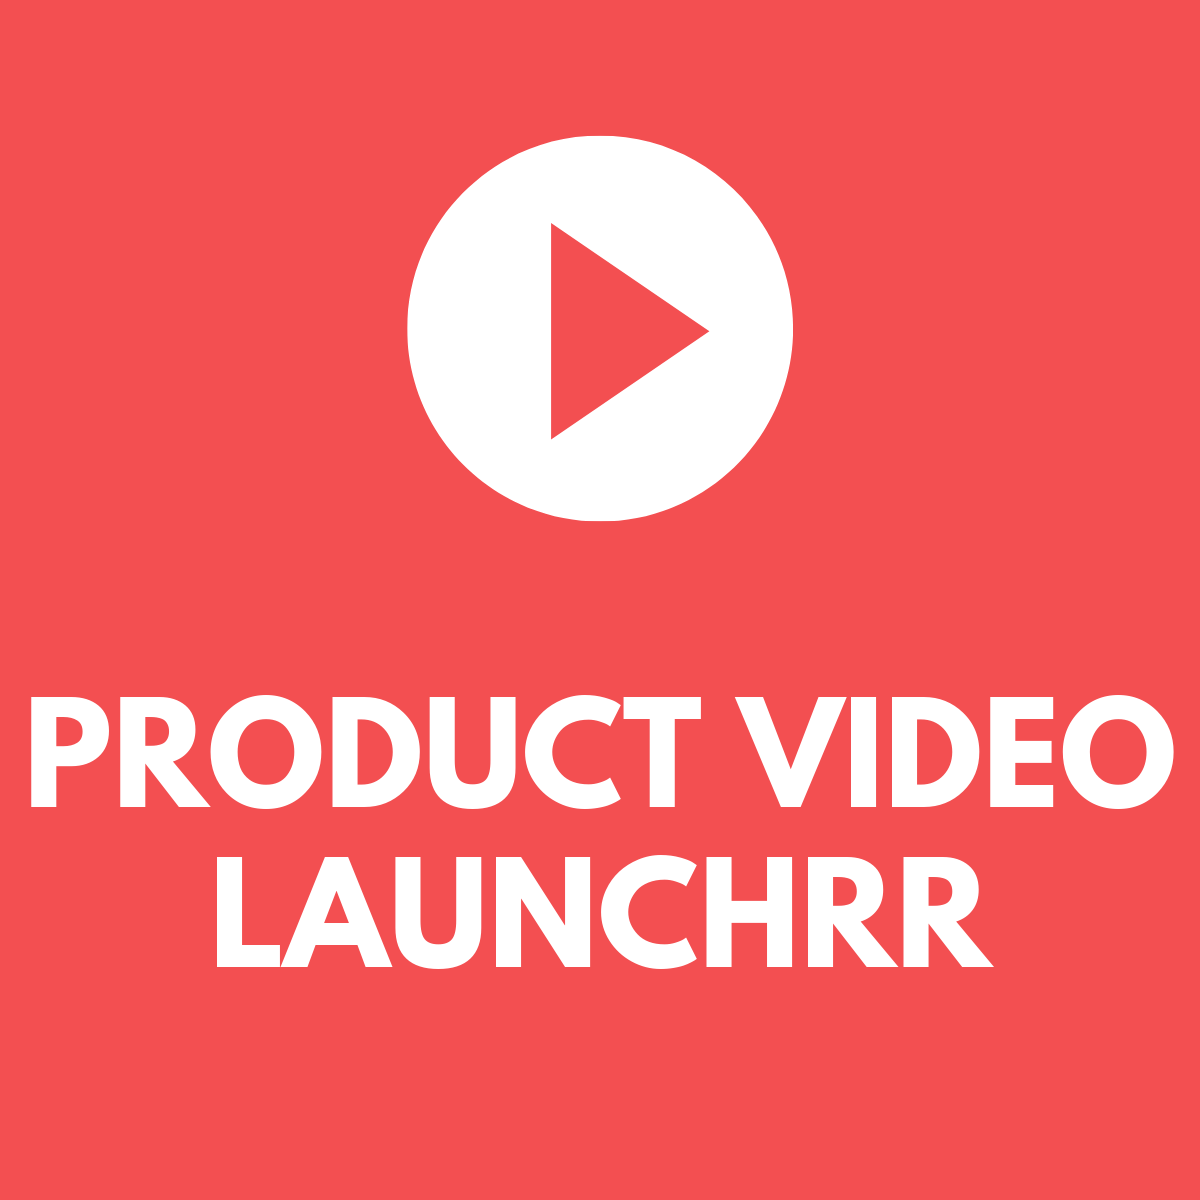 Product Video Launchrr